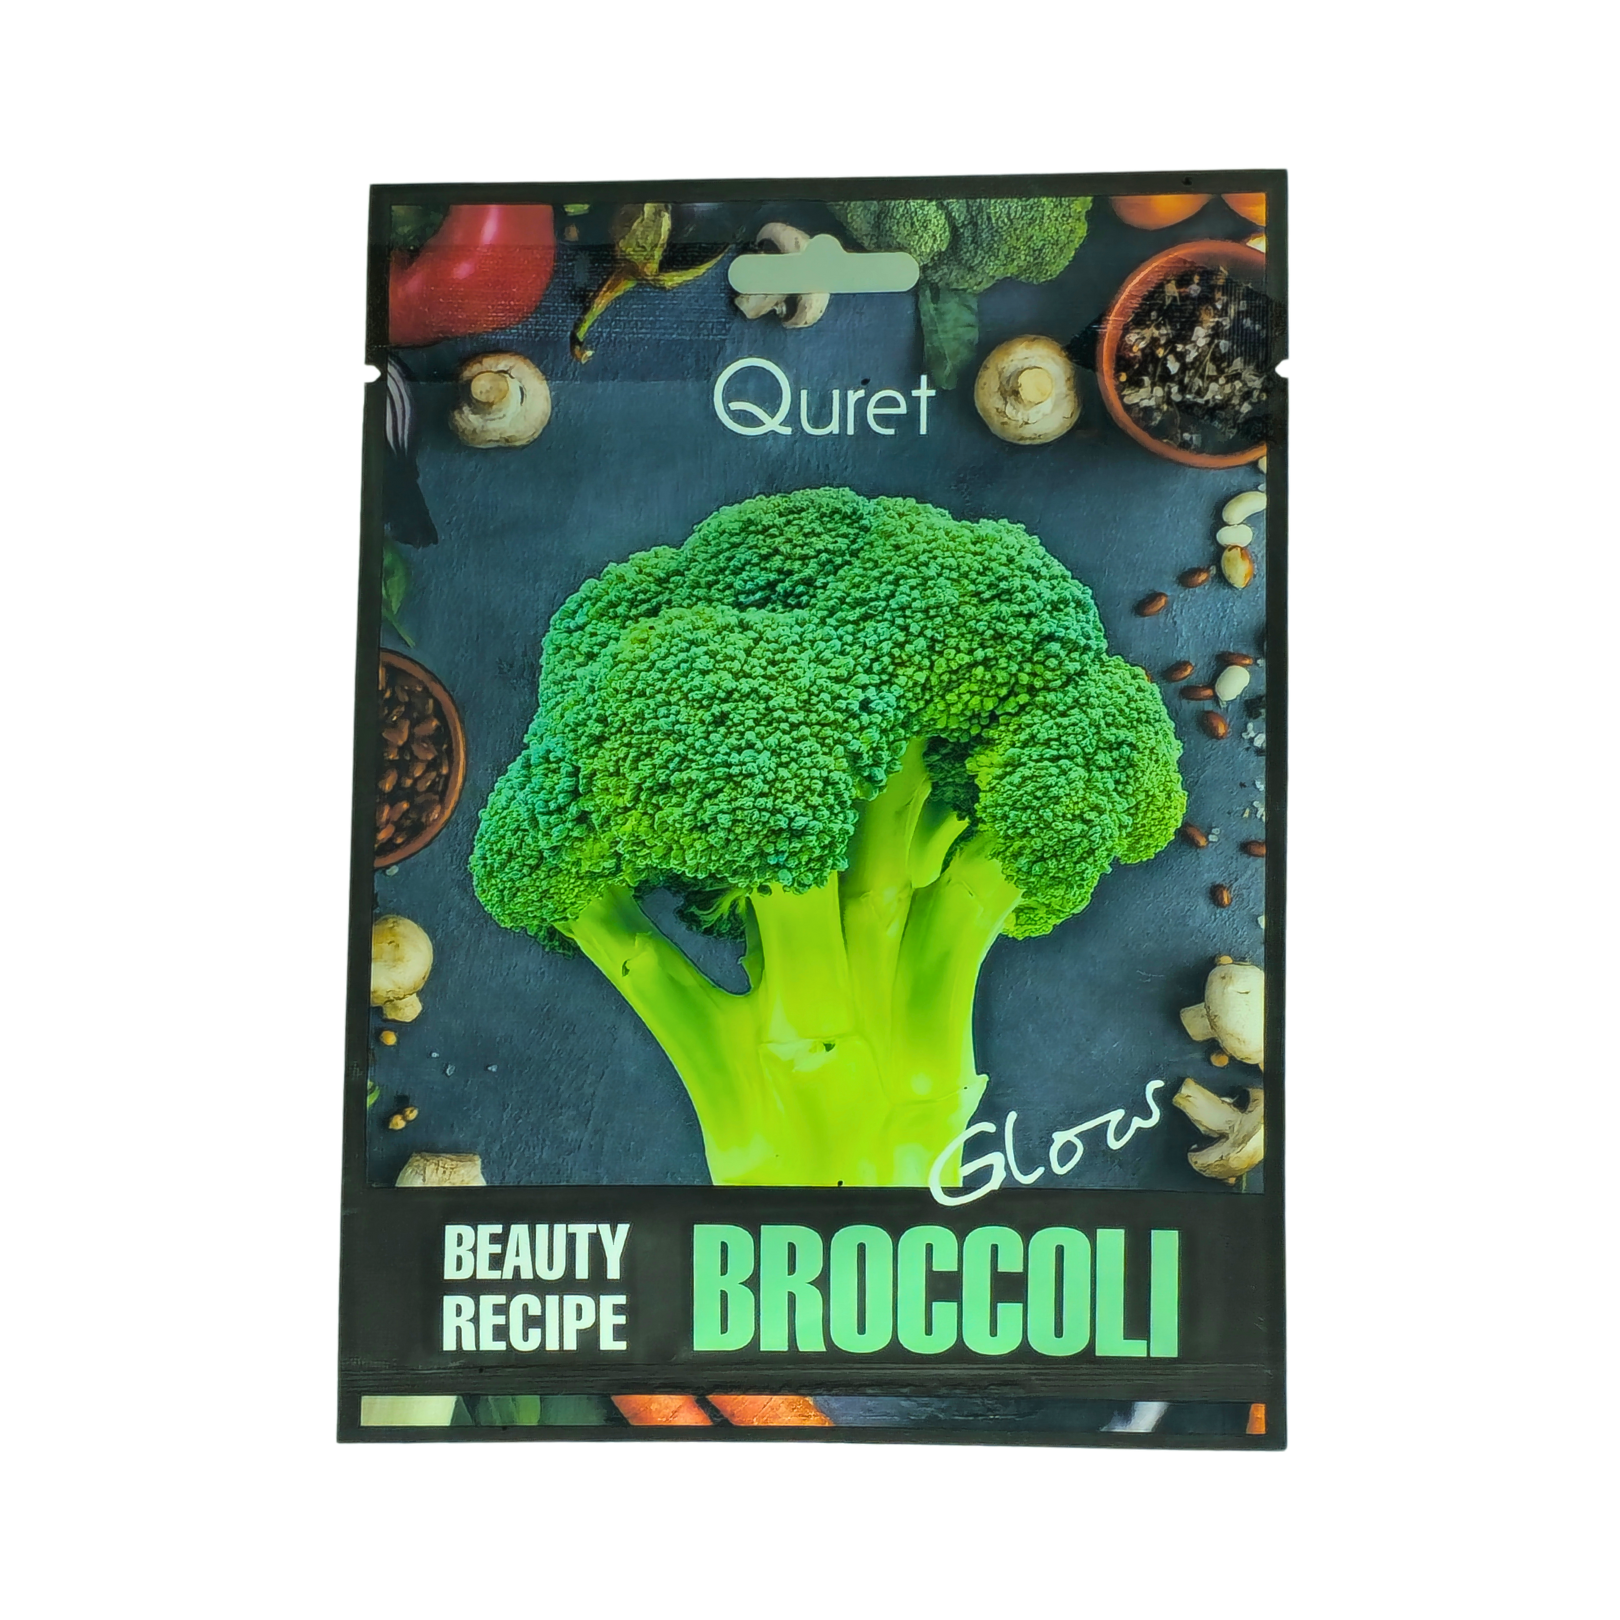 Quret beauty recipe mask - broccoli [glow] 25g / 0.88oz